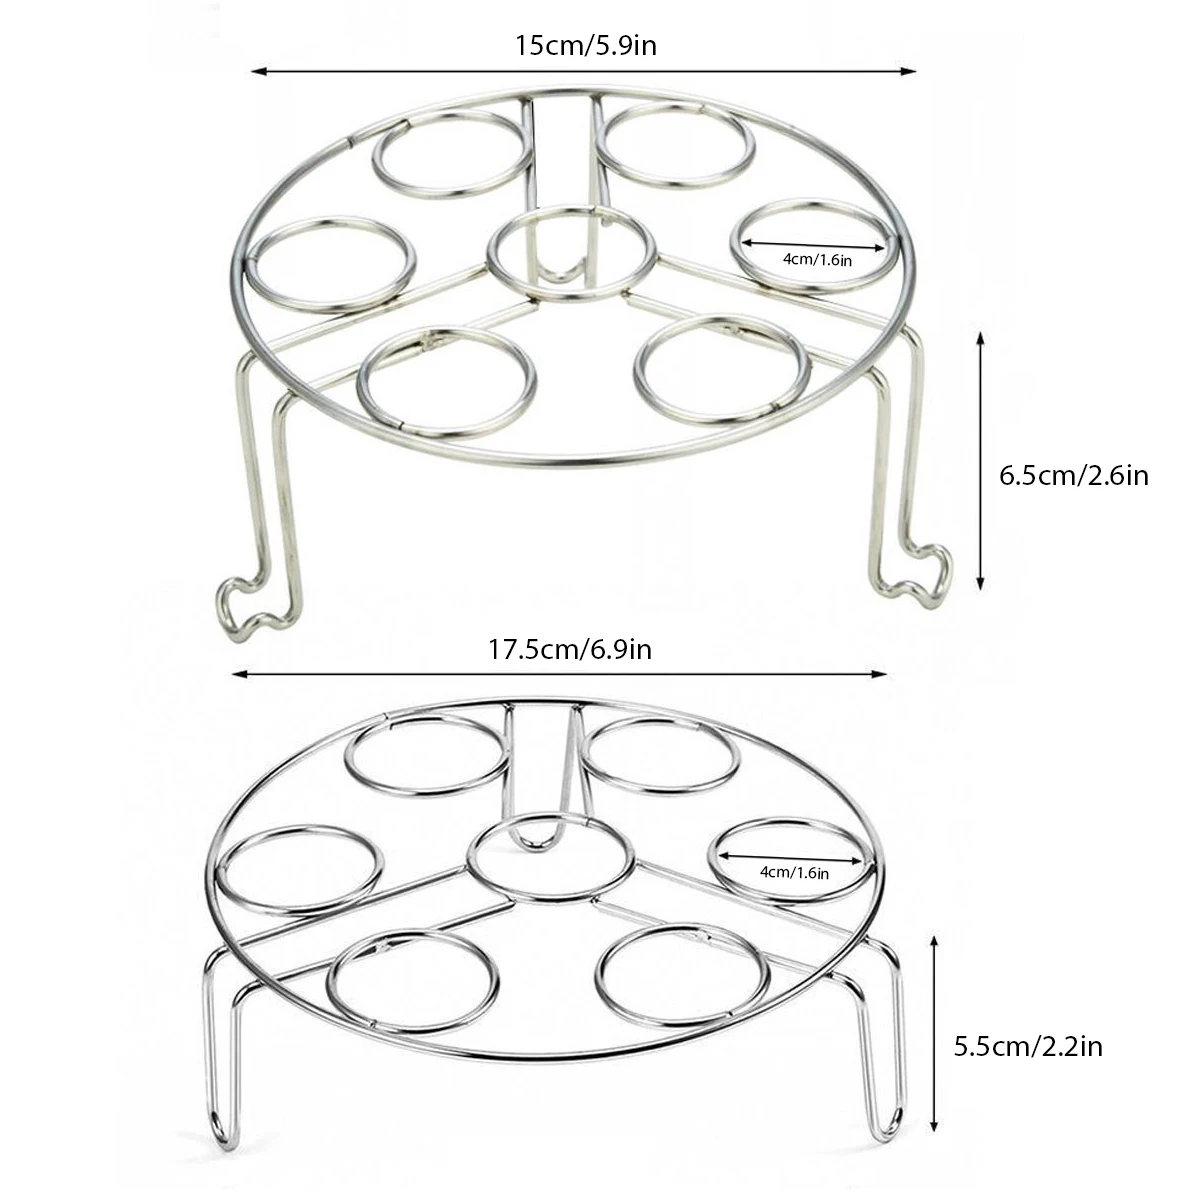 Set of 12 Circle Tea Light Candle HoldersModern Clear Glass DesignM/&W